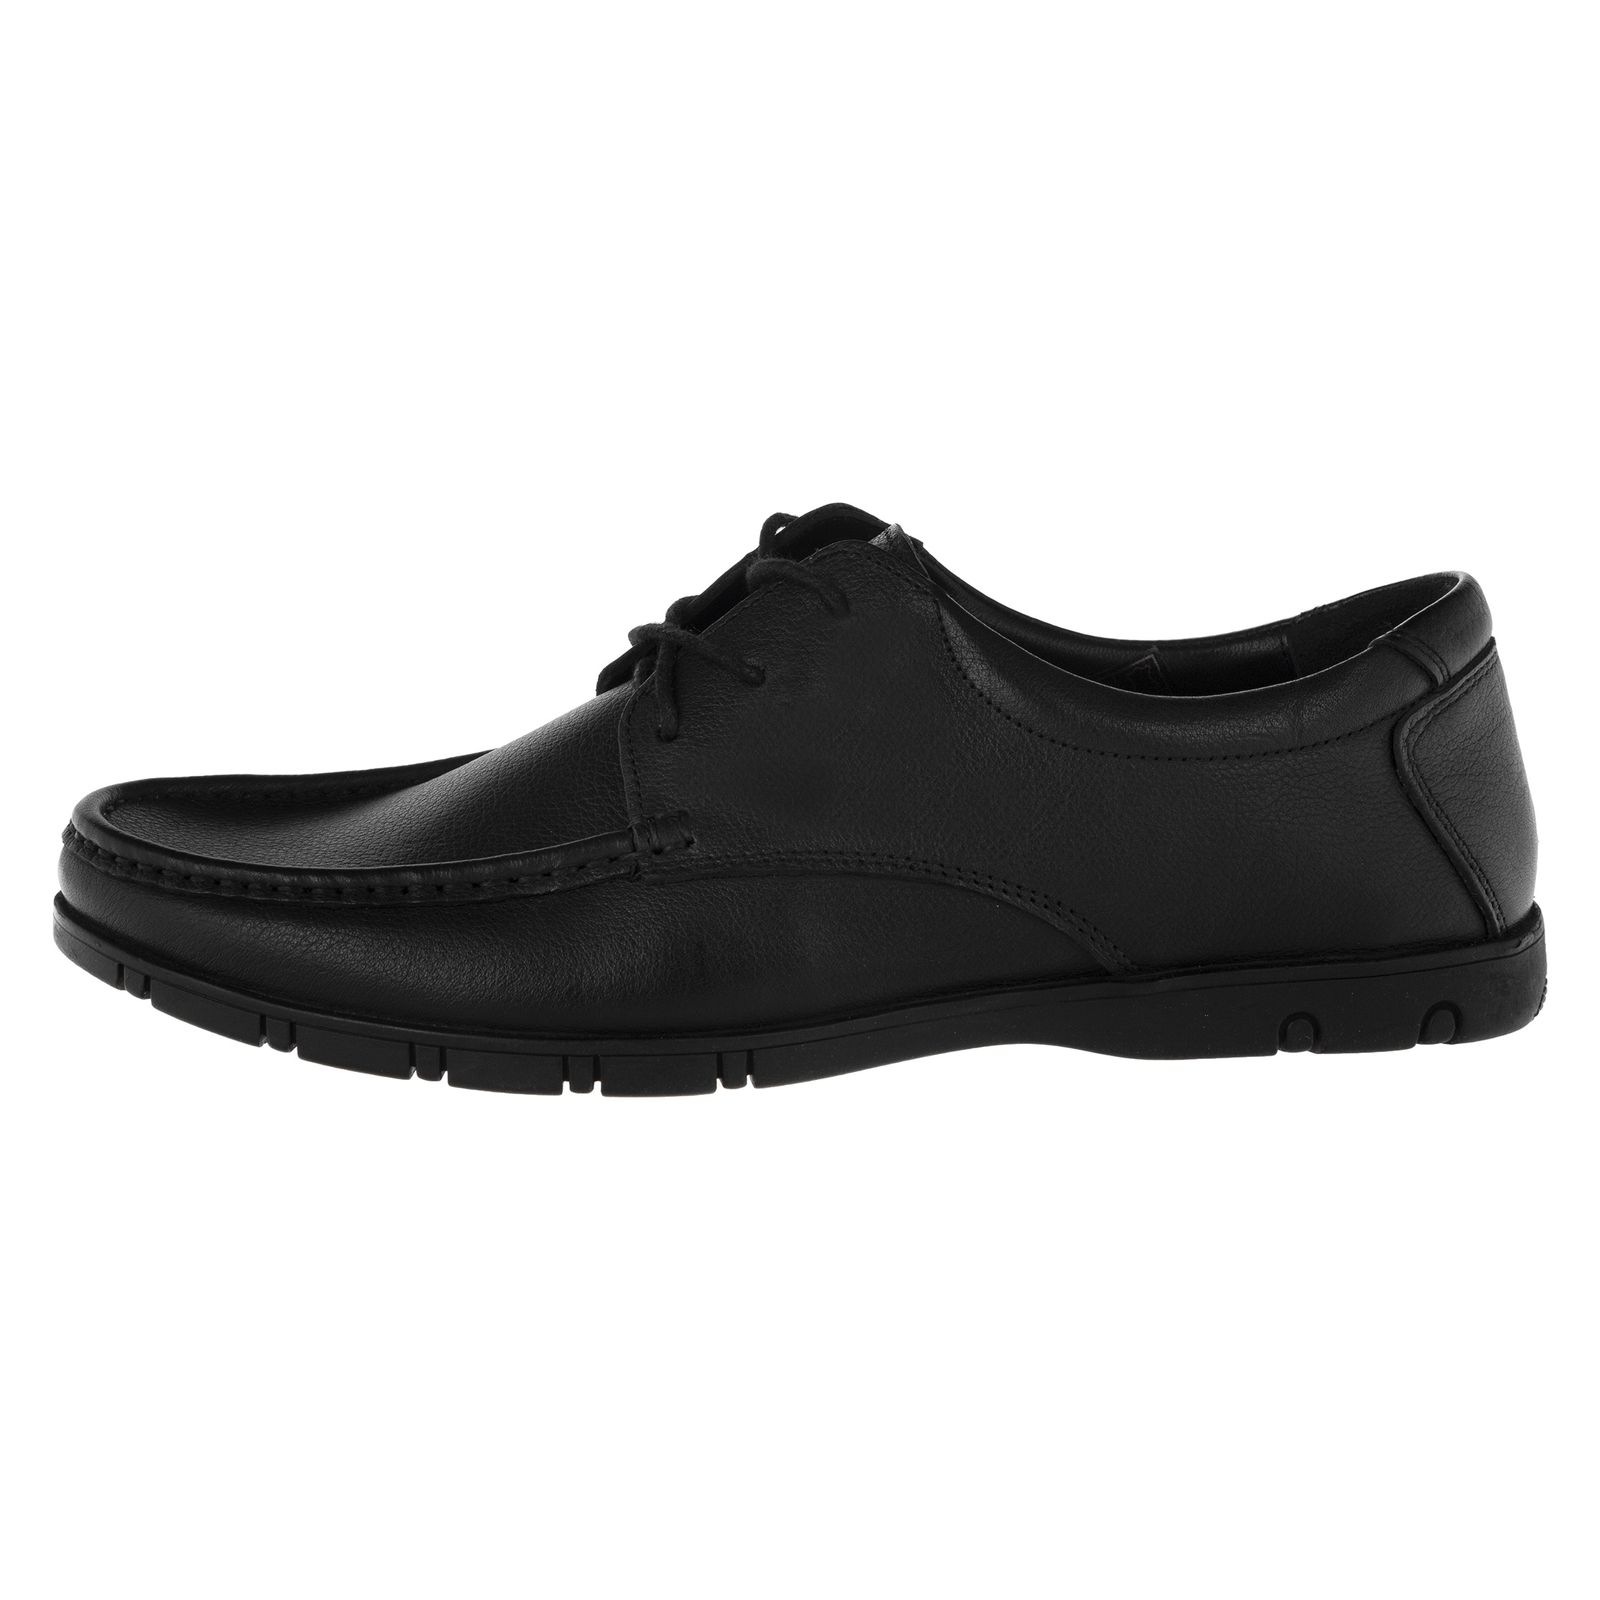 کفش روزمره مردانه فلوگارت مدل 100317181-101 - مشکی - 1